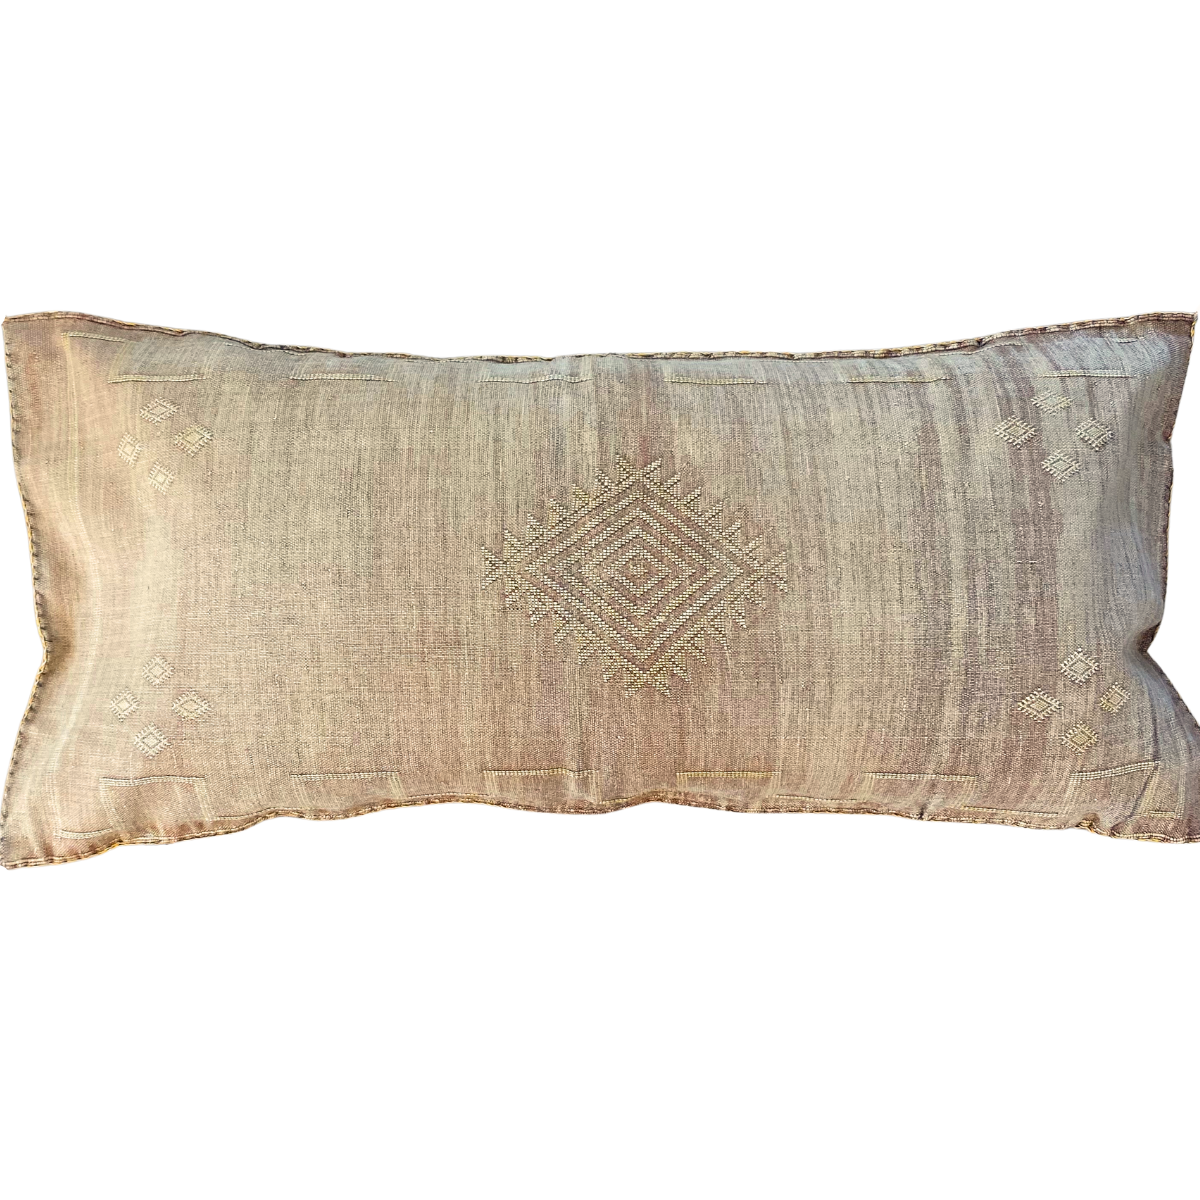 Cactus Silk Cushion 95cmx50cm Approx - Golden Brown